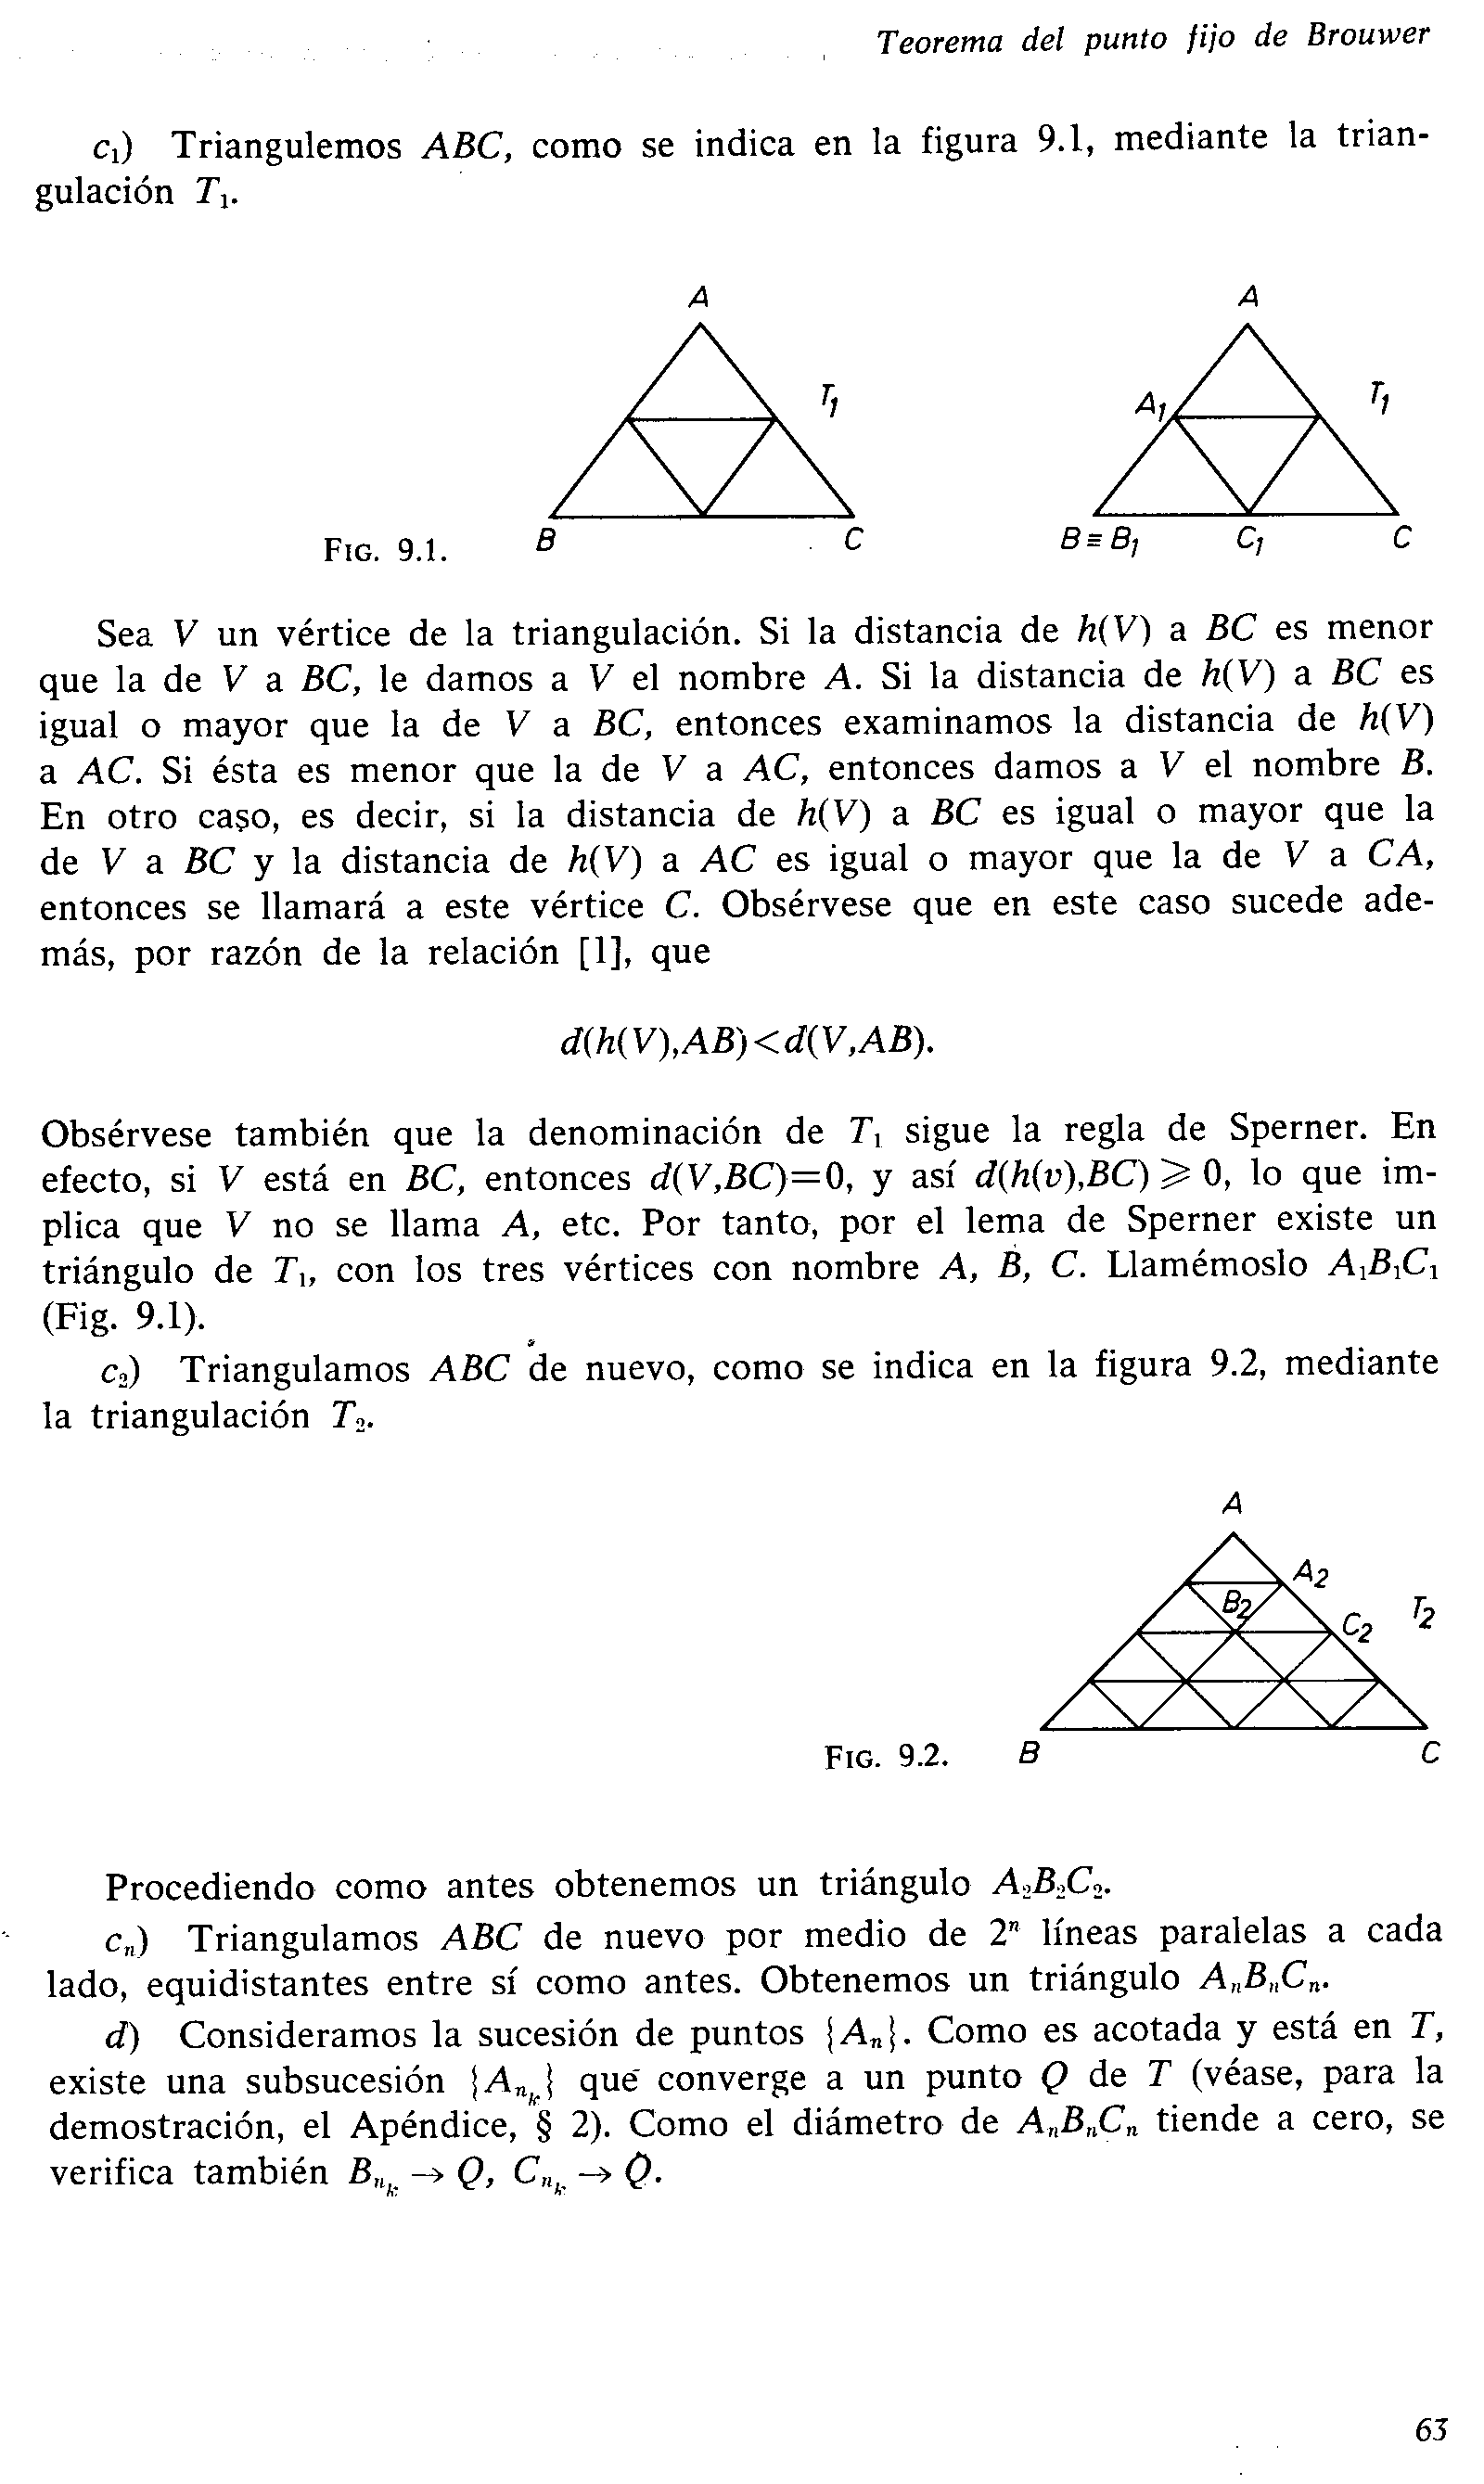 Graphics (p.8-1)